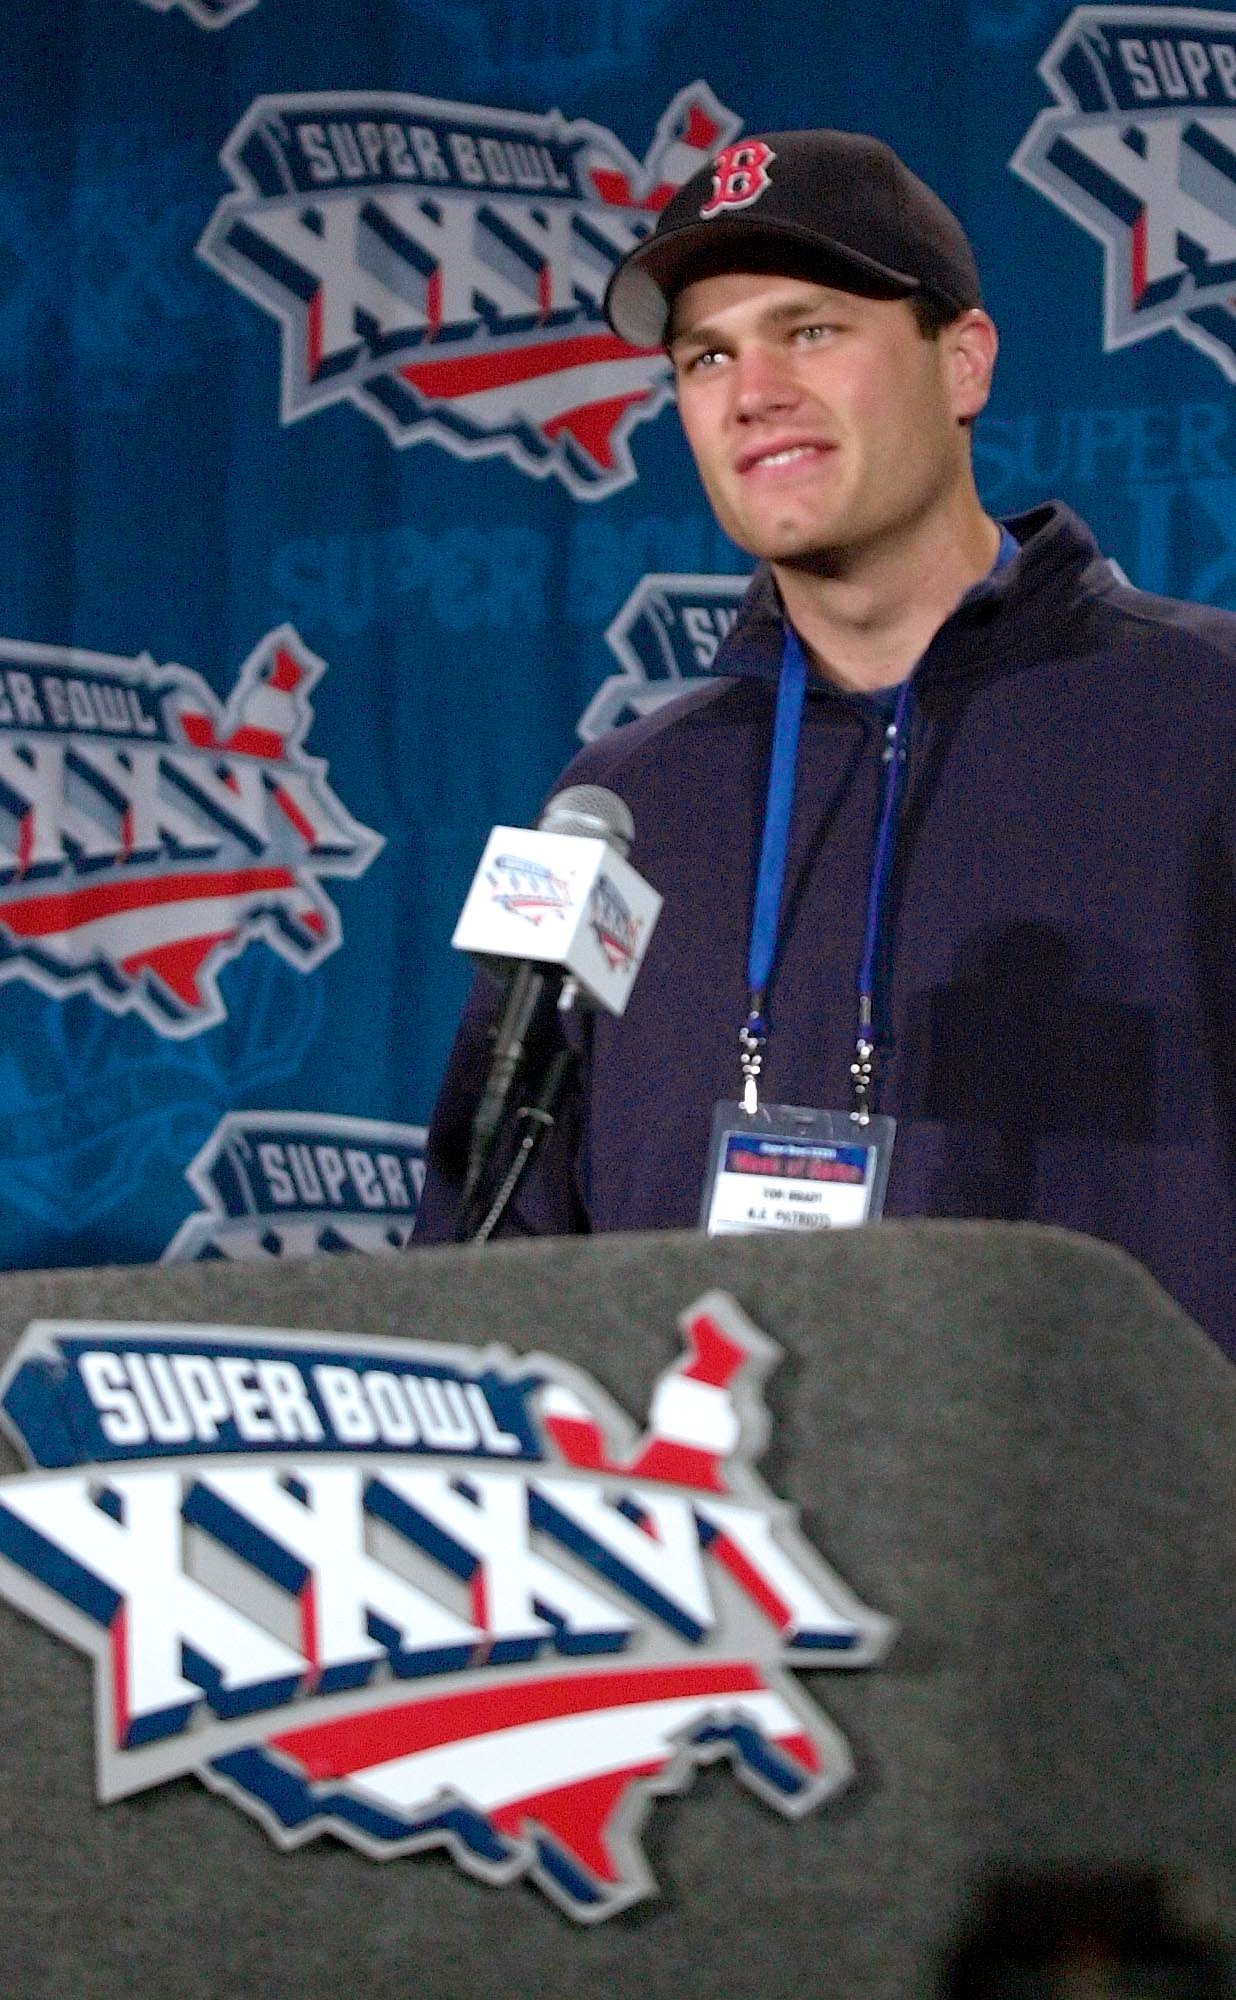 Tom Brady in 2001 vs. Tom Brady now : r/pics